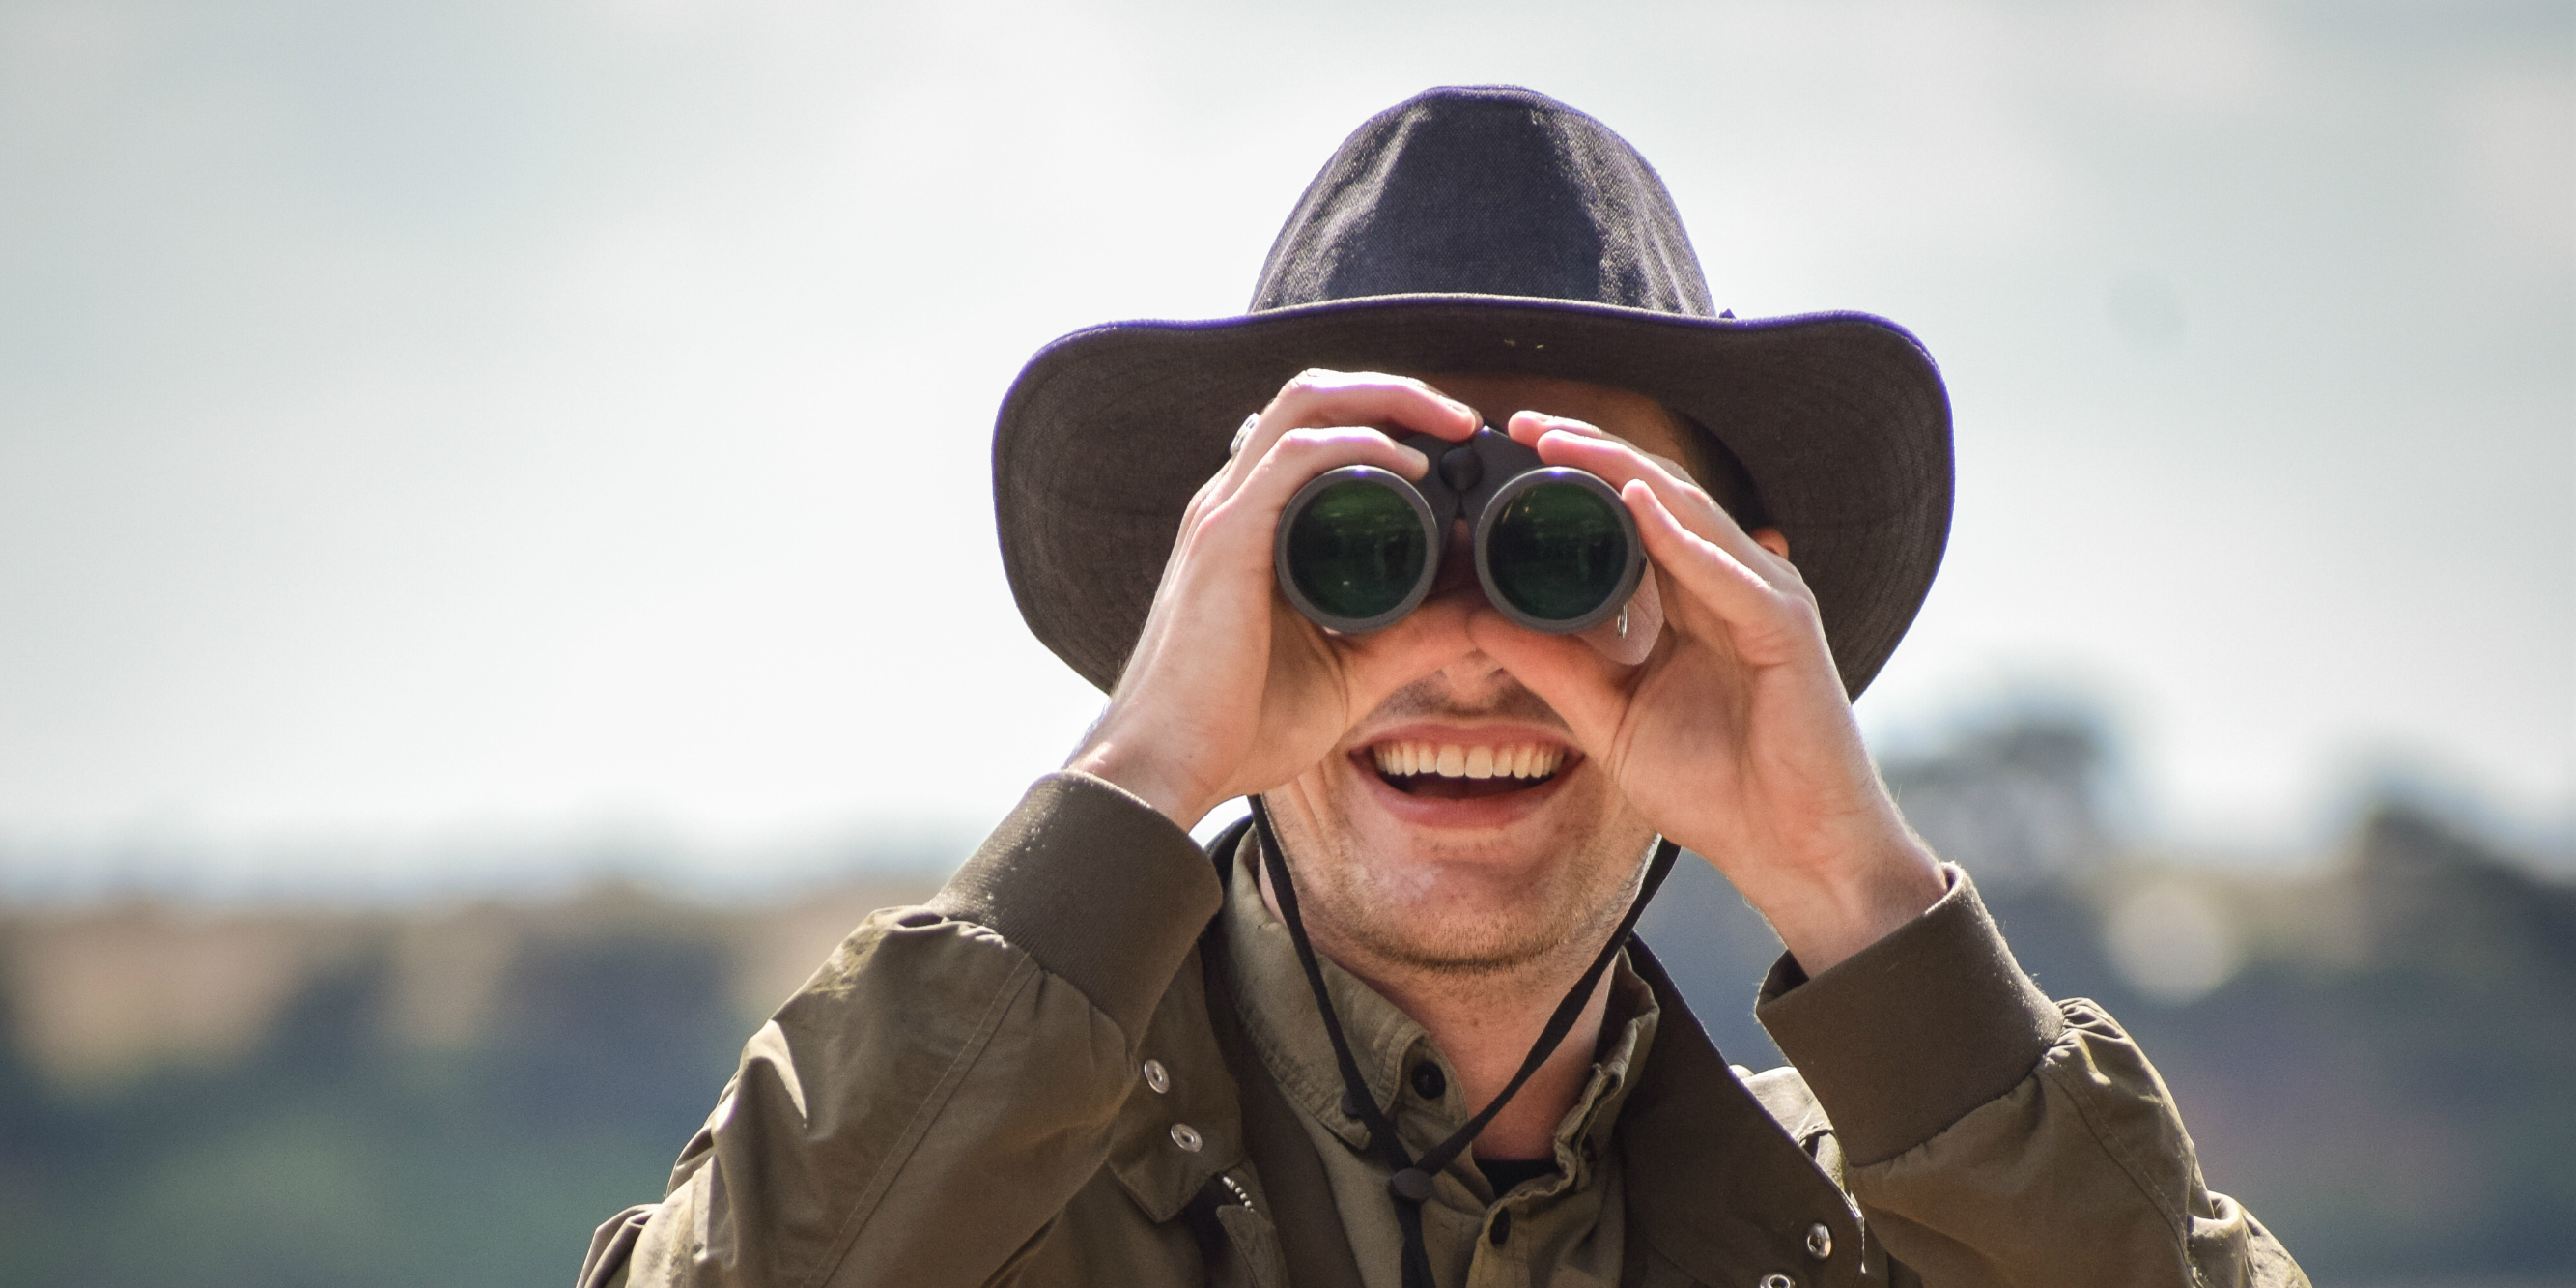 A wildlifer conservation participant looks through binoculars.